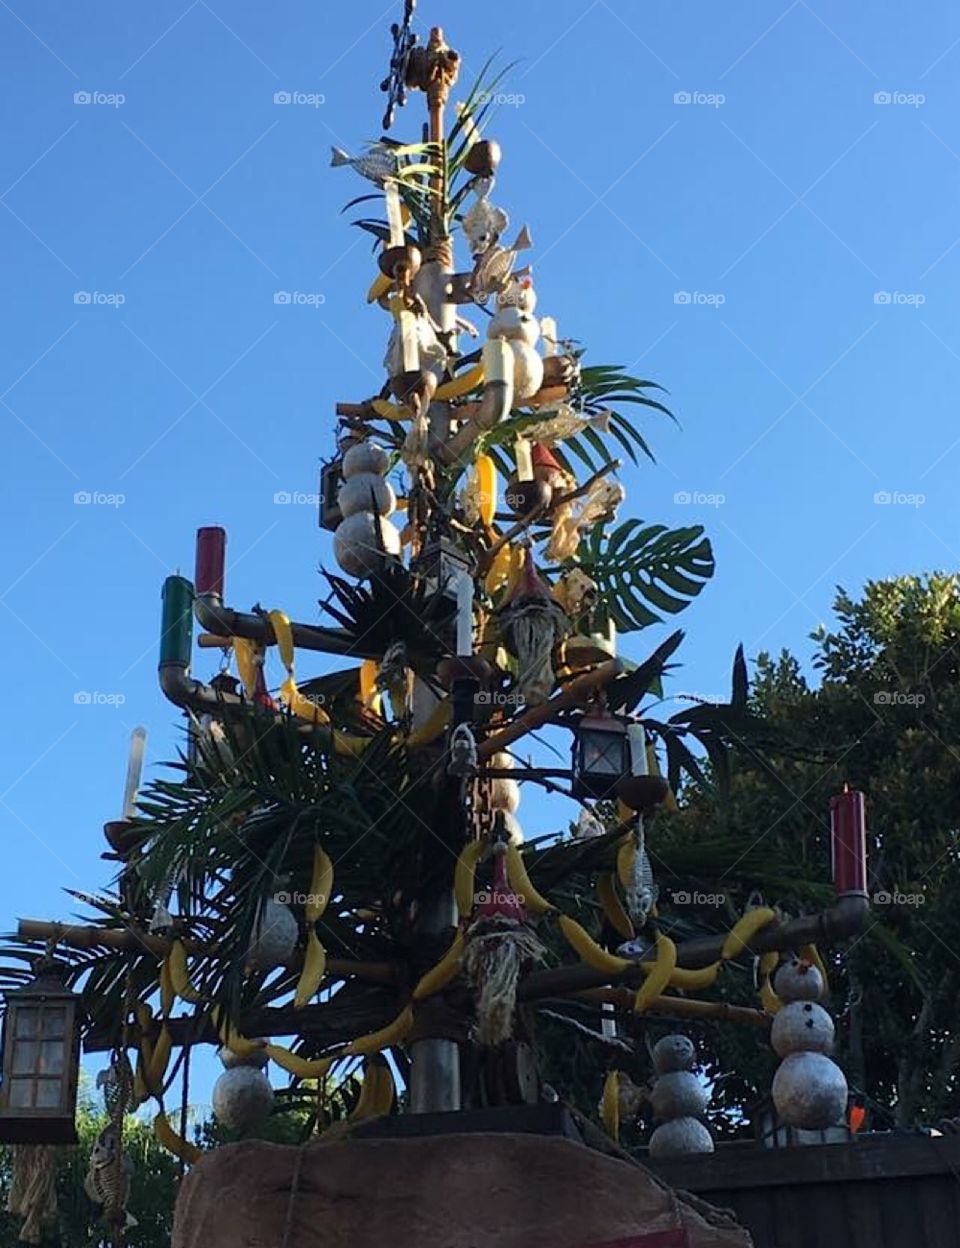 Coolest Christmas tree in Adventureland at Disneyland, California.